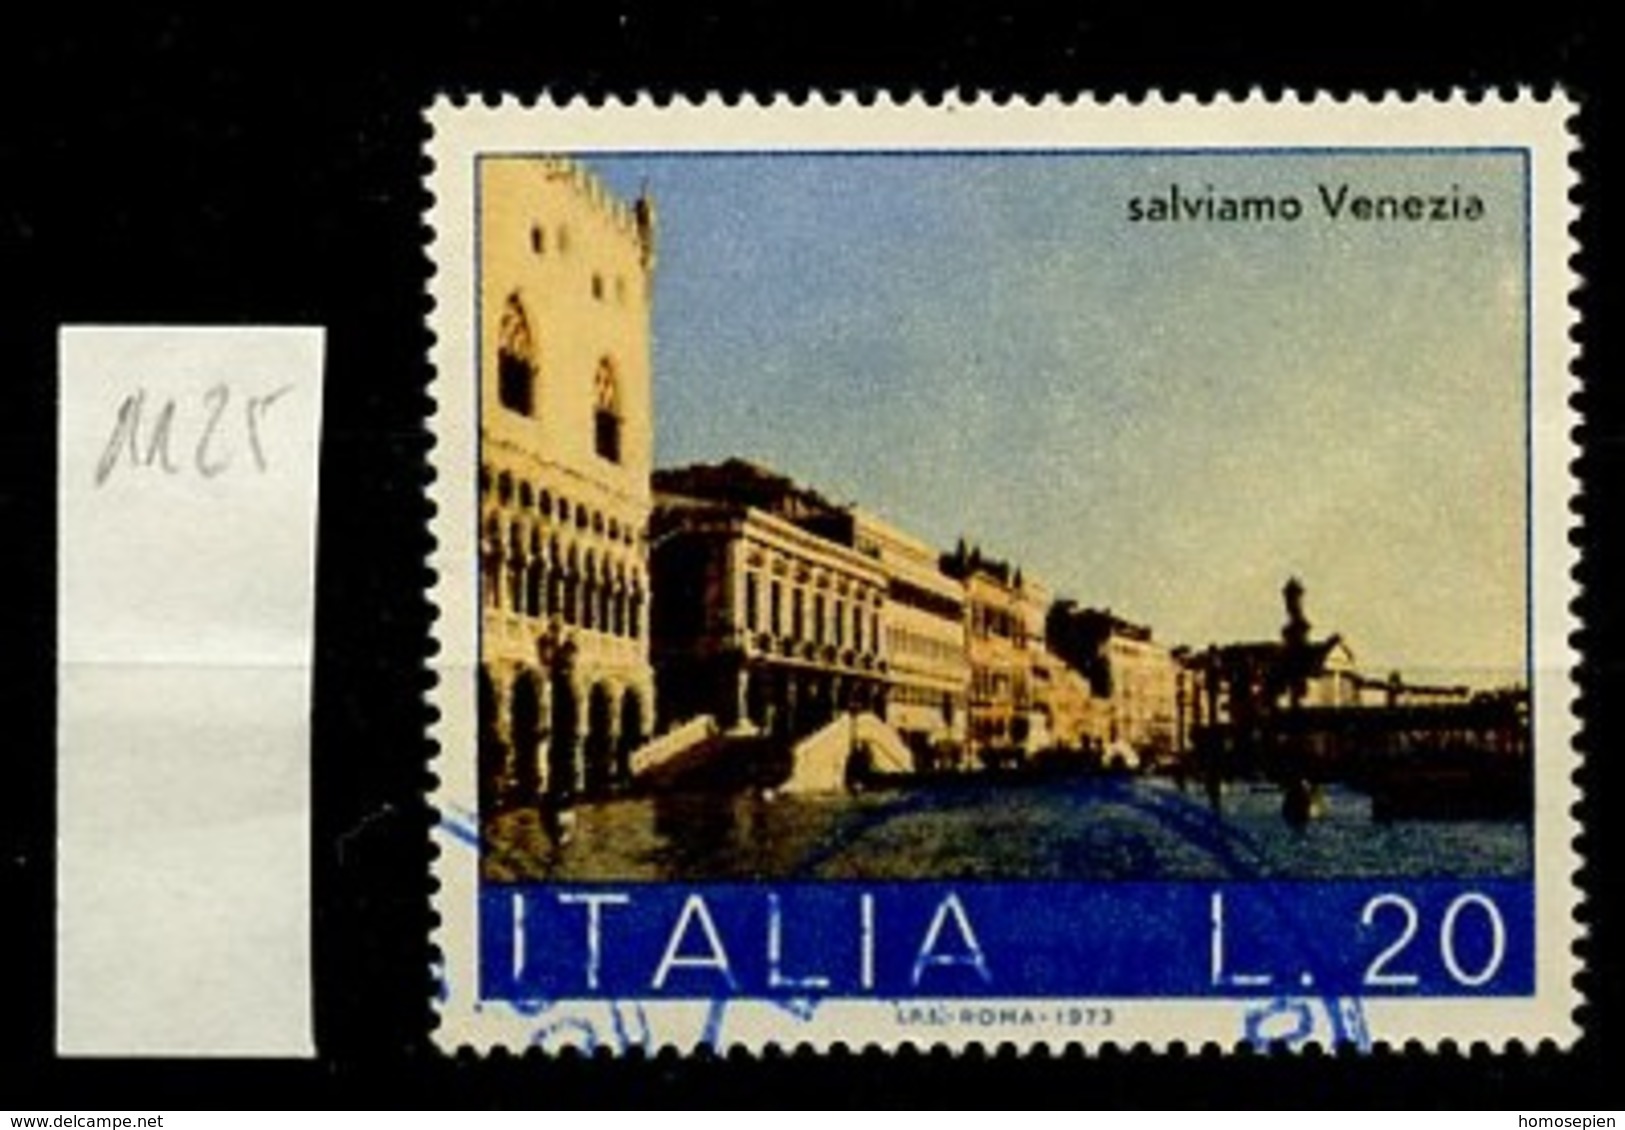 Italie - Italy - Italien 1973 Y&T N°1125 - Michel N°1391 (o) - 20l Venise - 1971-80: Gebraucht